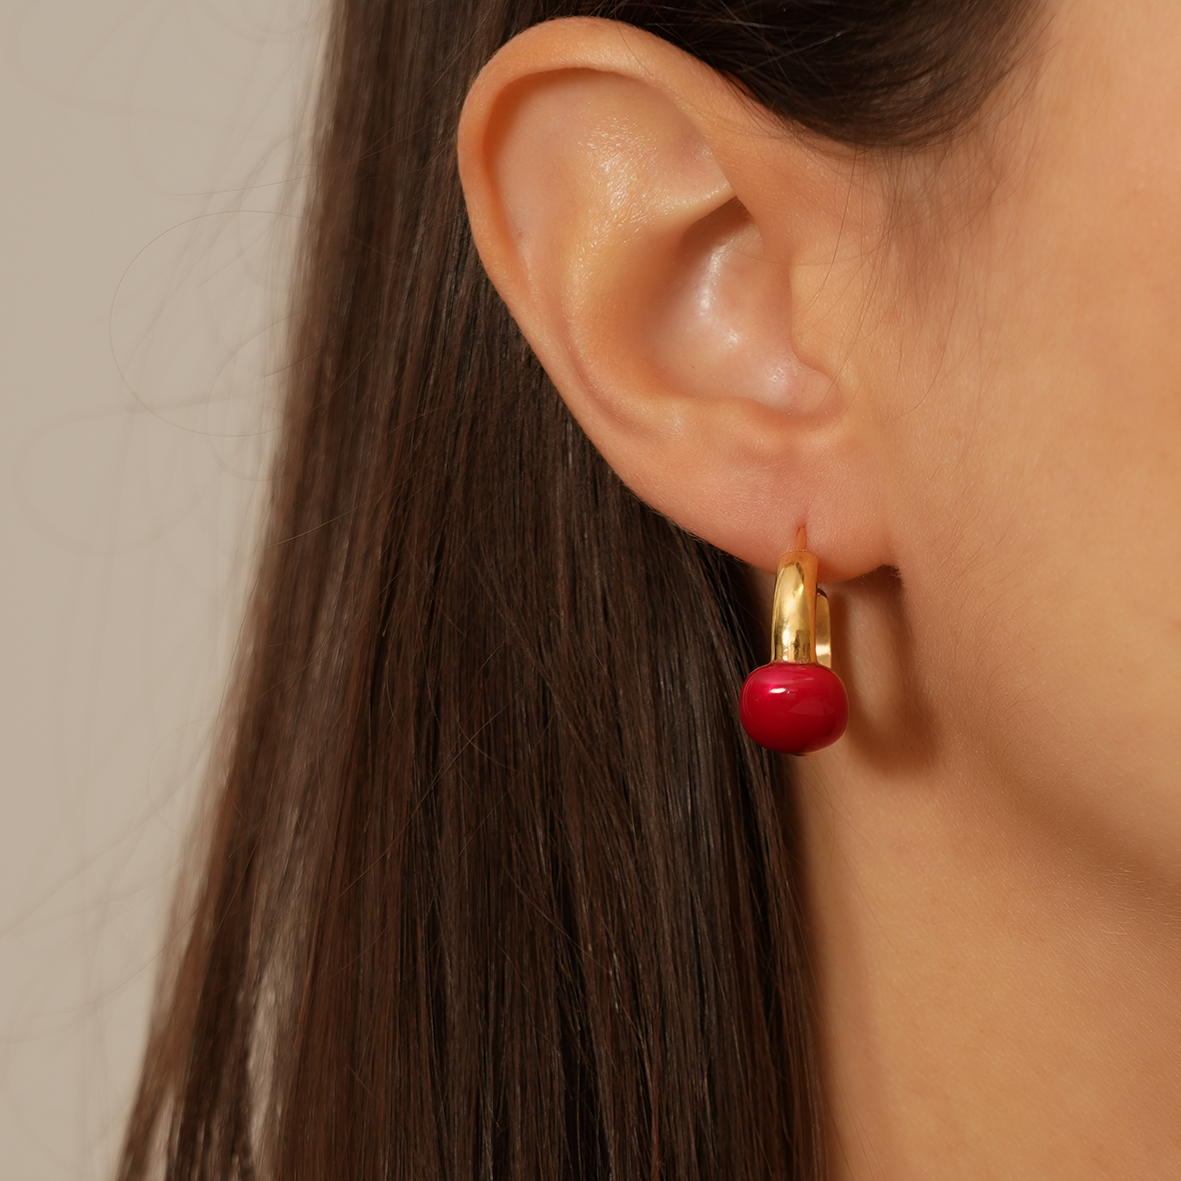 GREGIO Hoop Earrings with Red Enamel - Gold Plated Silver 925